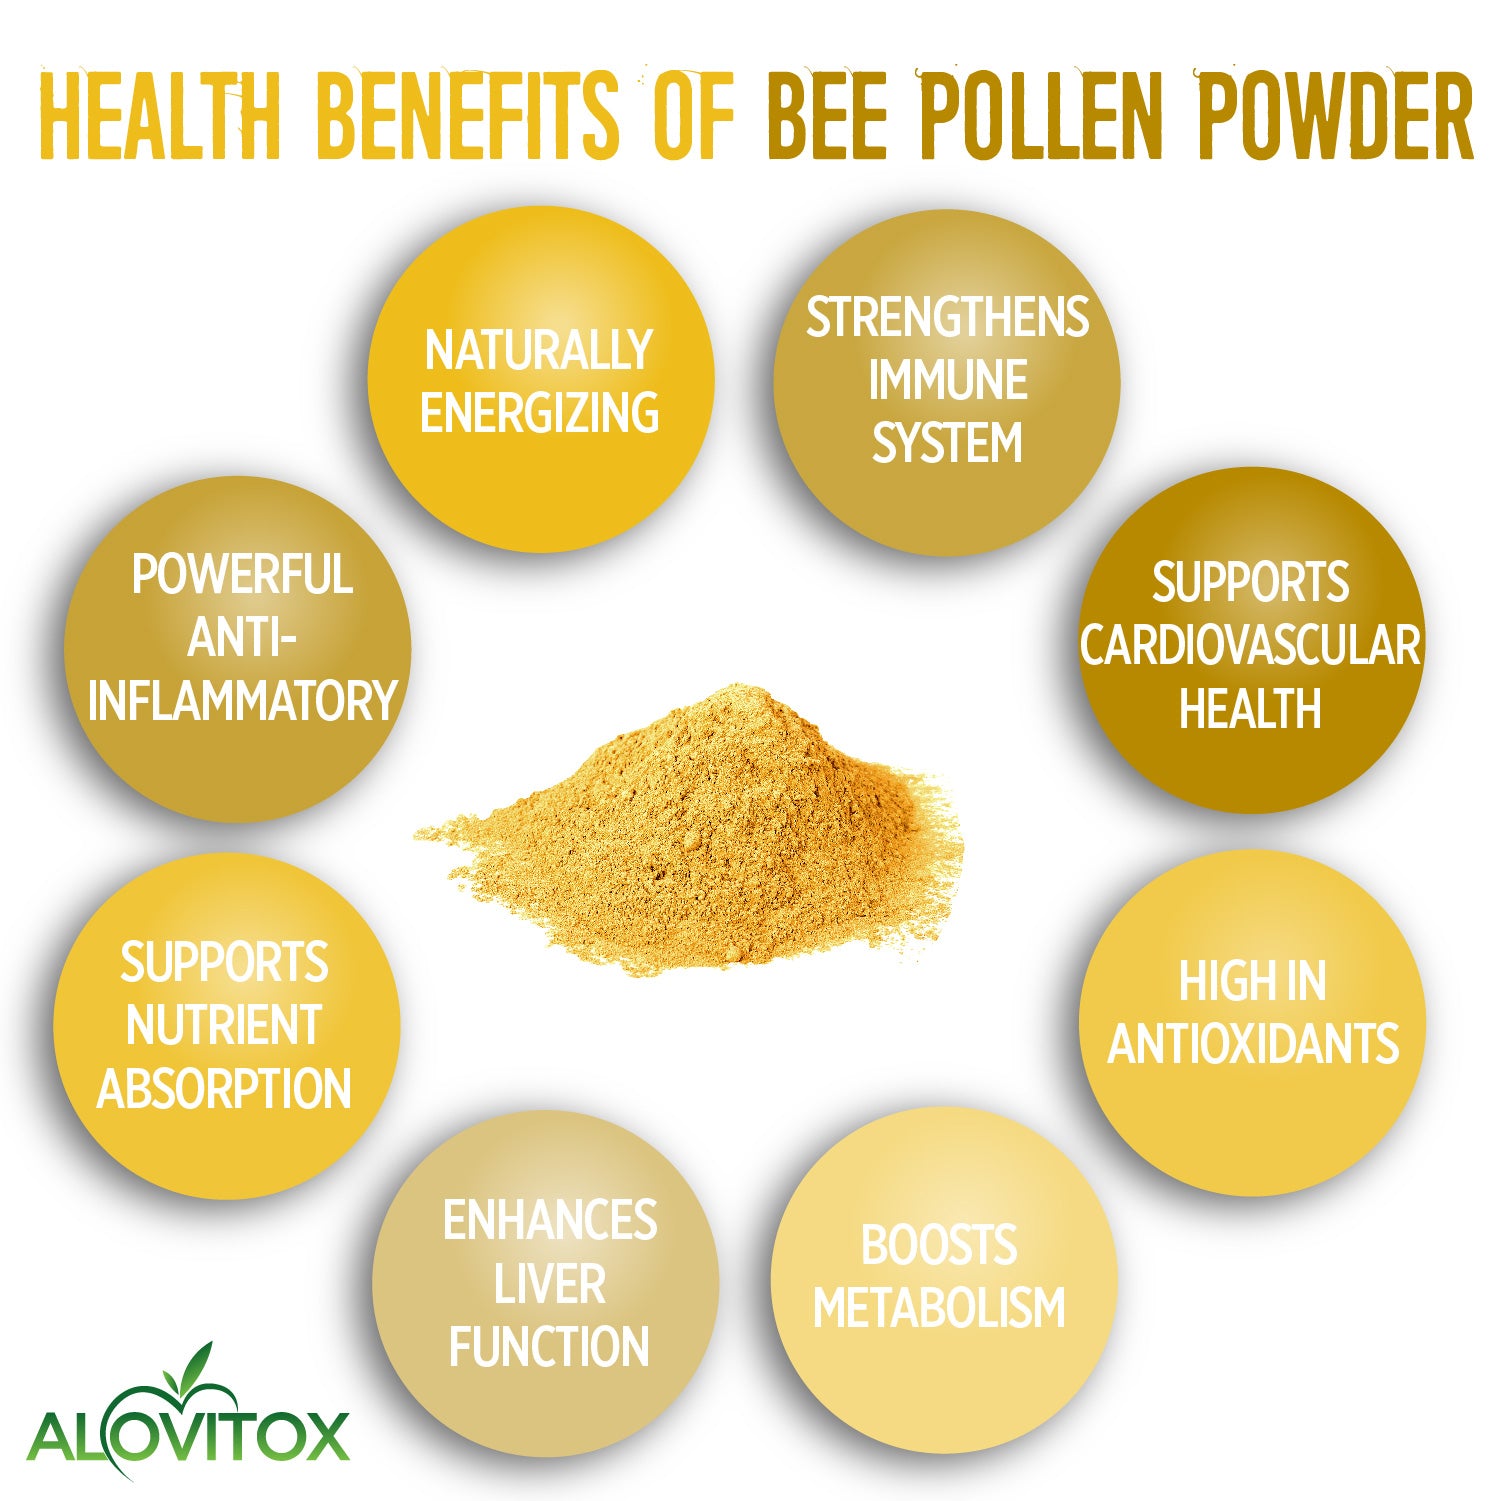 Bee Pollen Powder